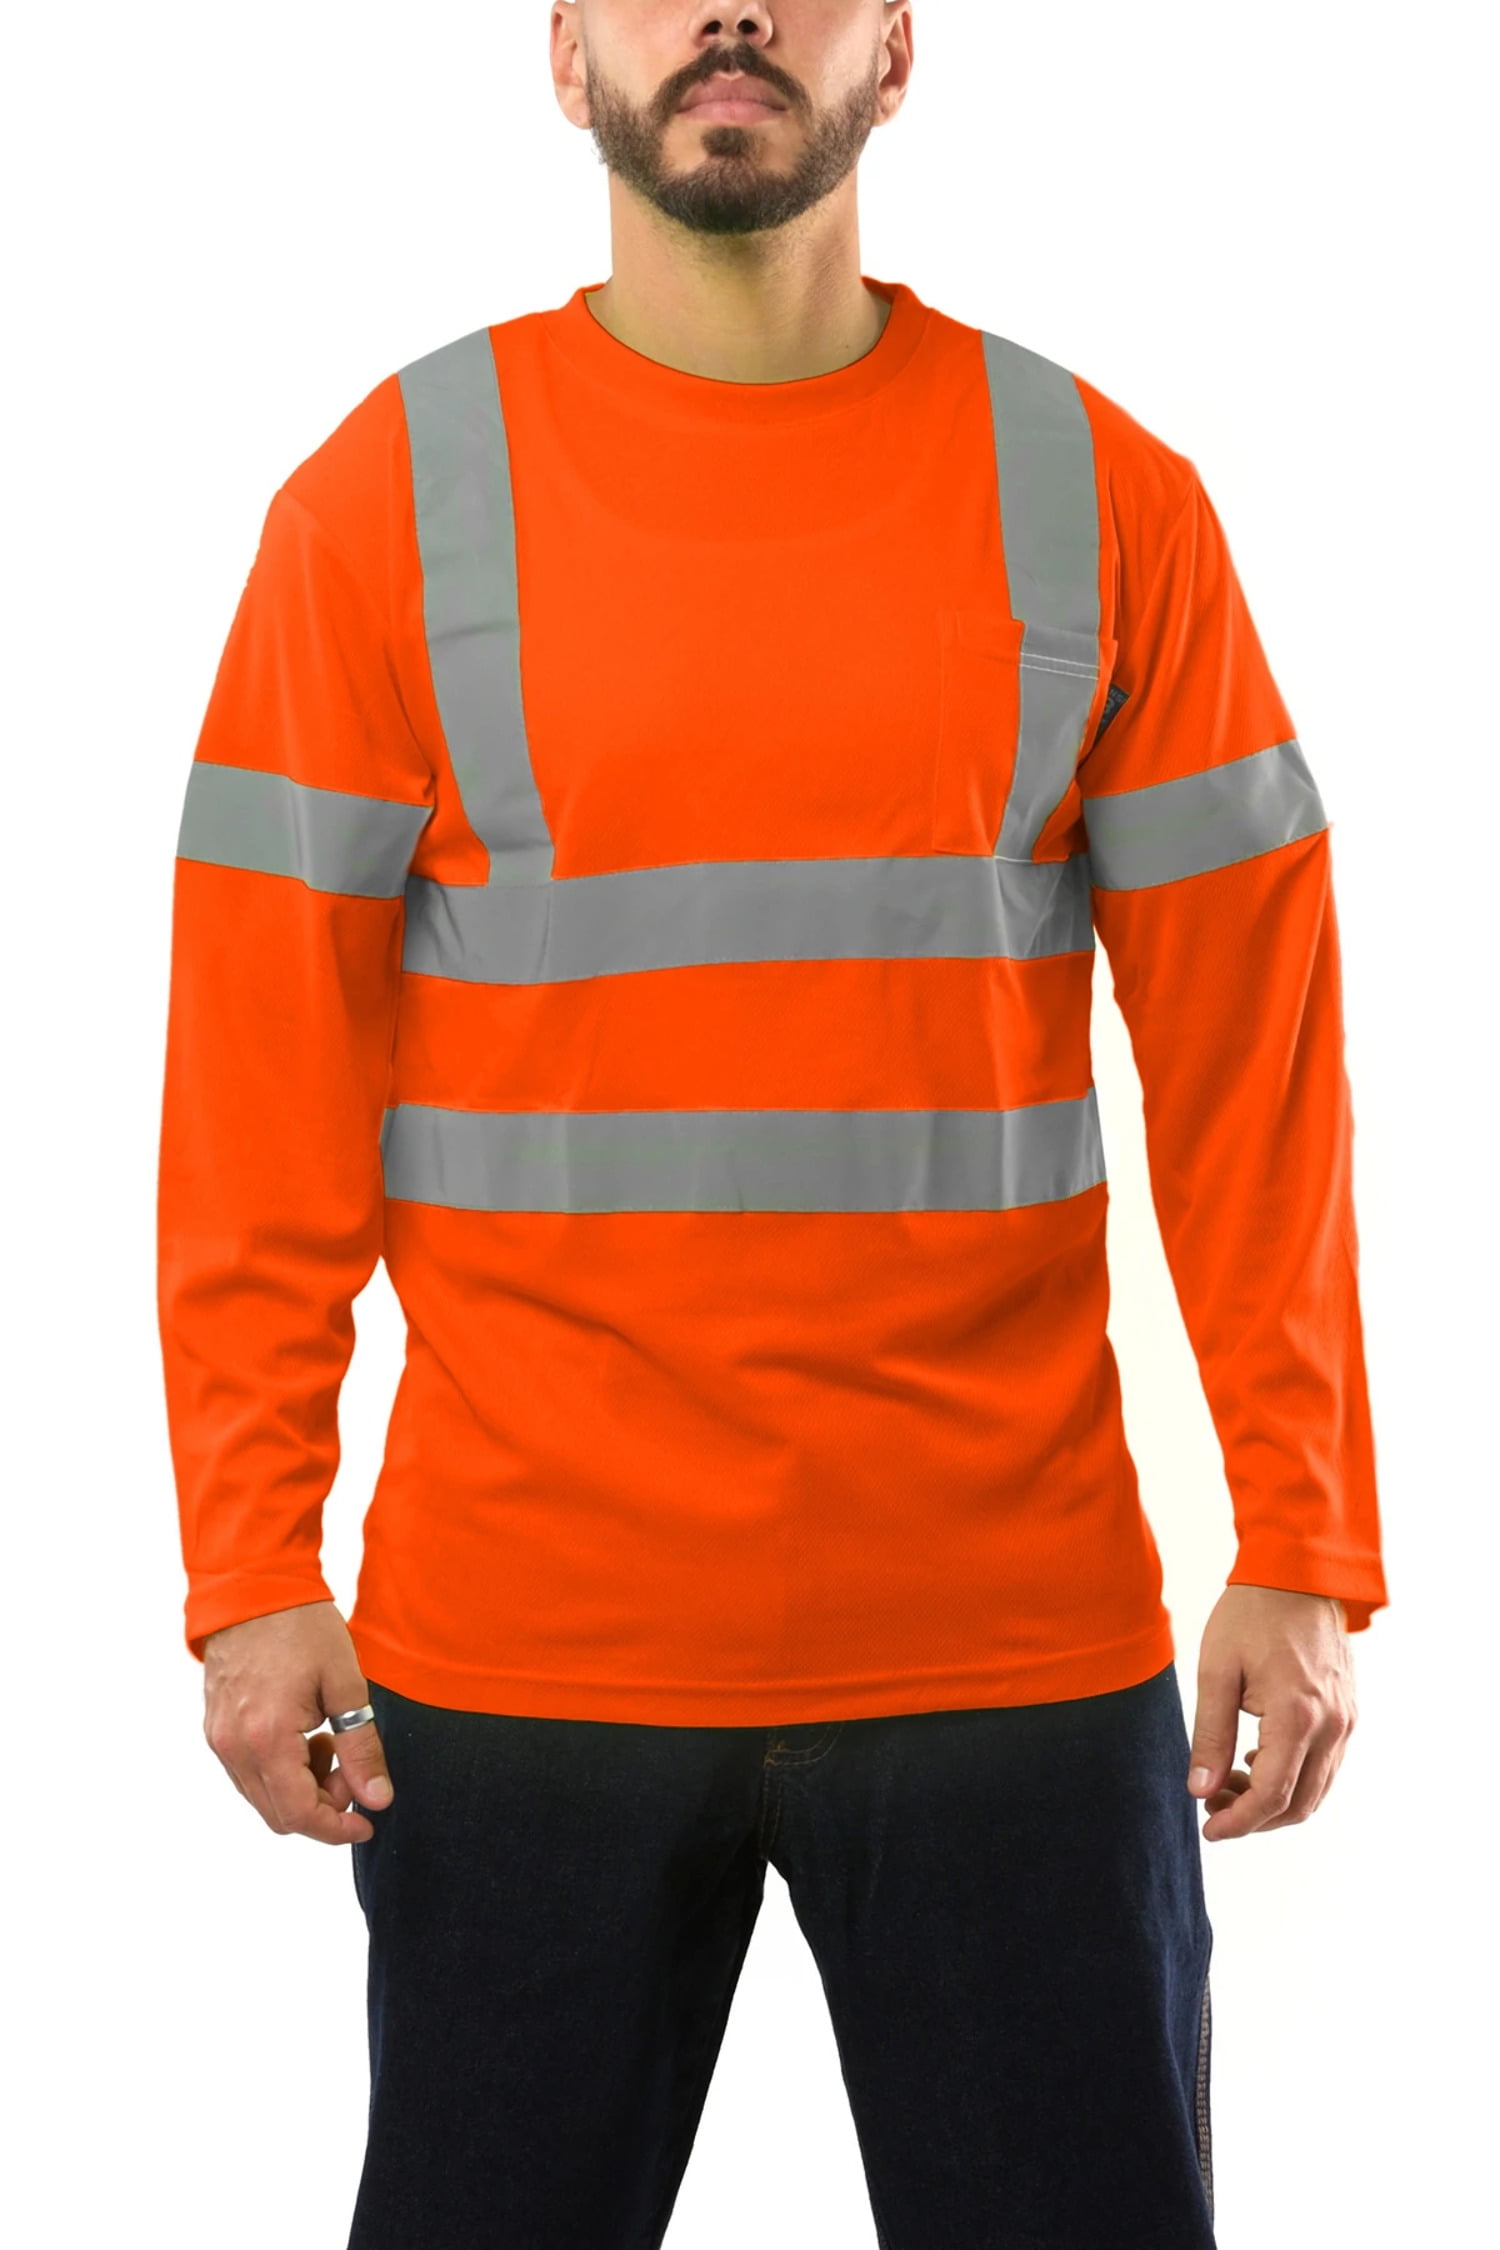 Details about   New York Hi-Viz Workwear BFLH6511 High-Visibility Class 3 Long Sleeve T-Shirt 